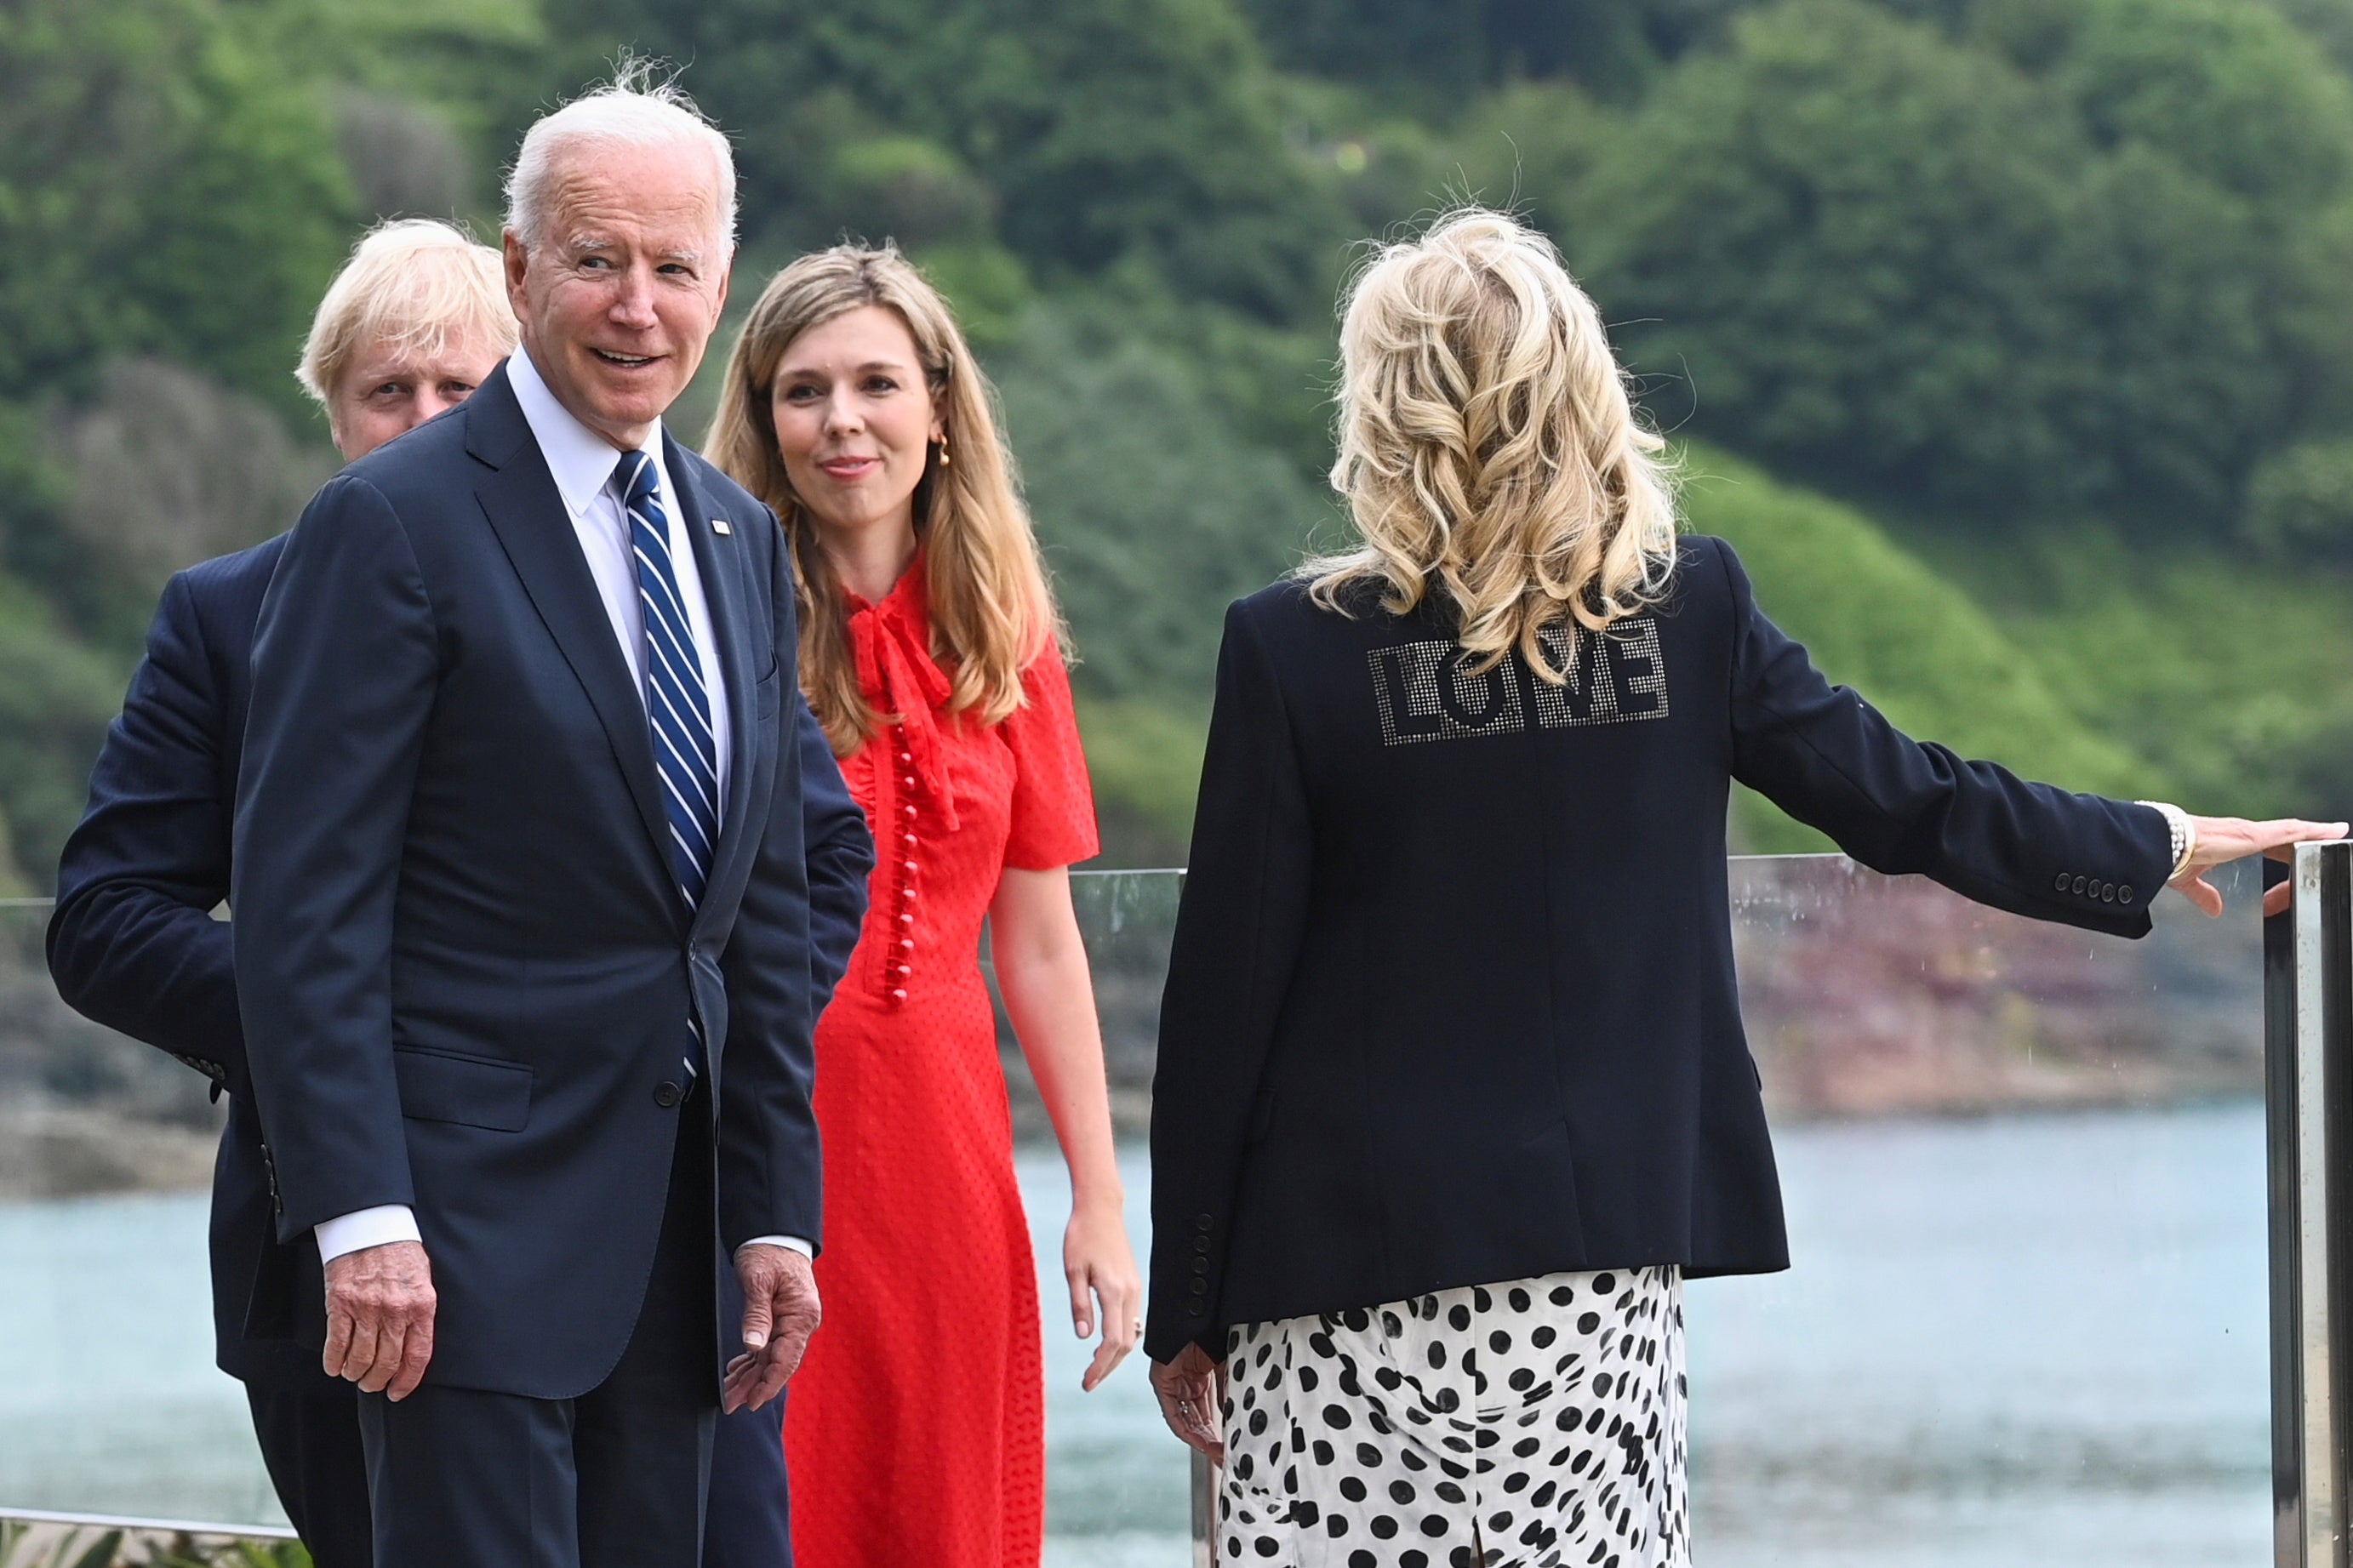 Joe Biden, Boris Johnson and the G7 leaders meet this week